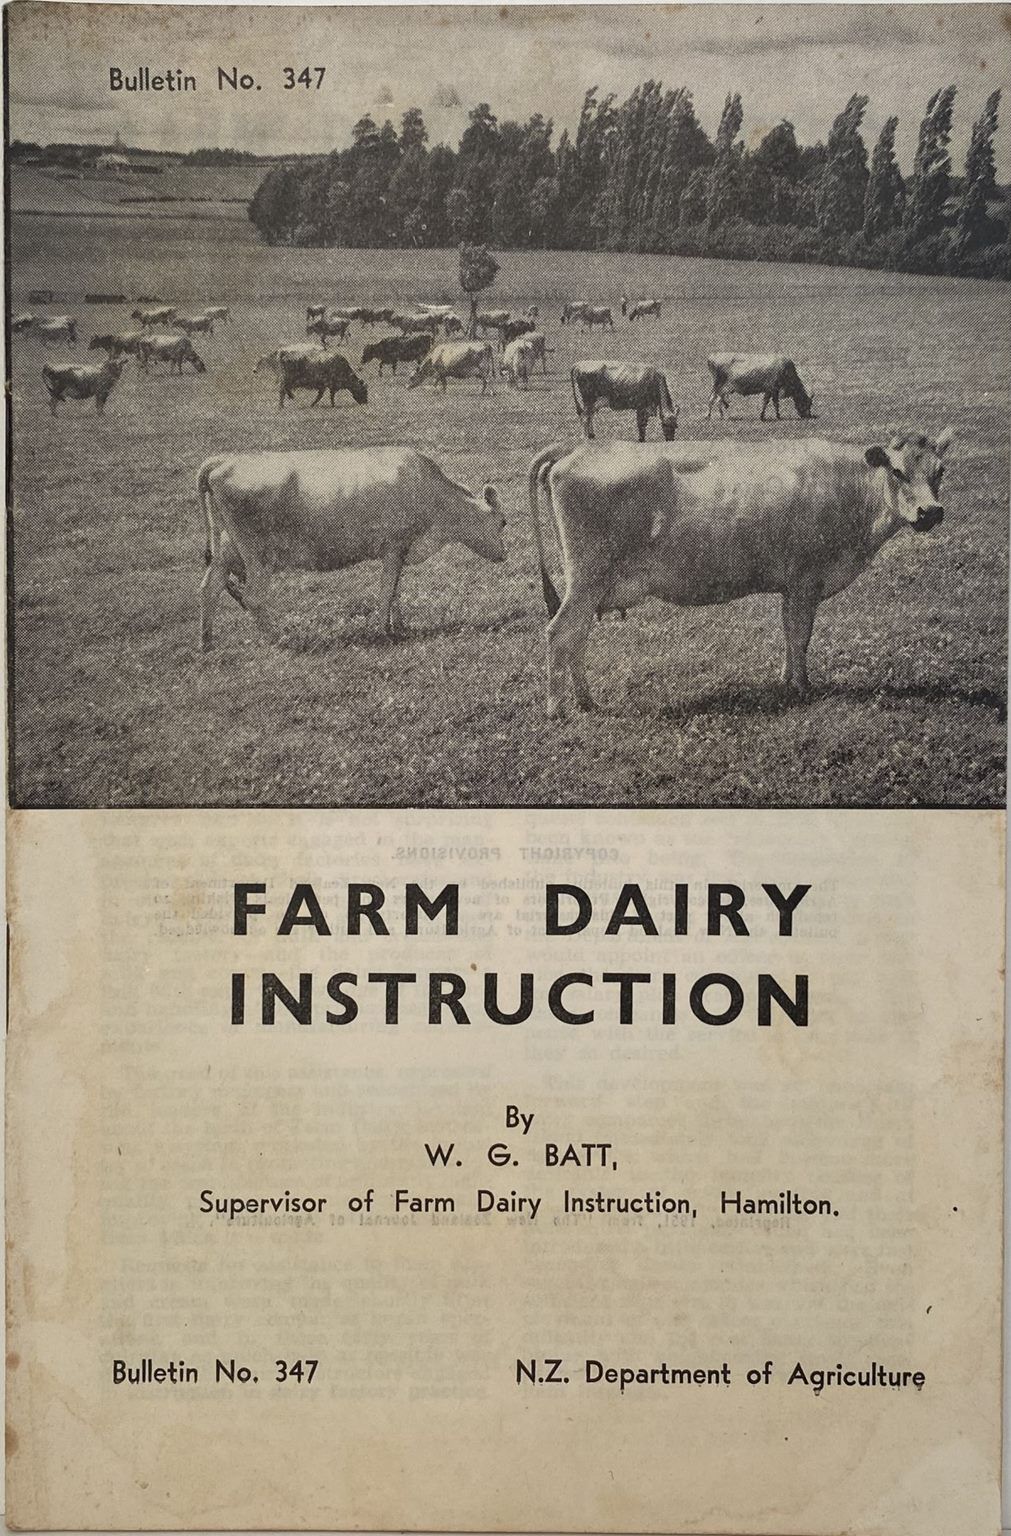 FARM DAIRY INSTRUCTION: Bulletin No. 347